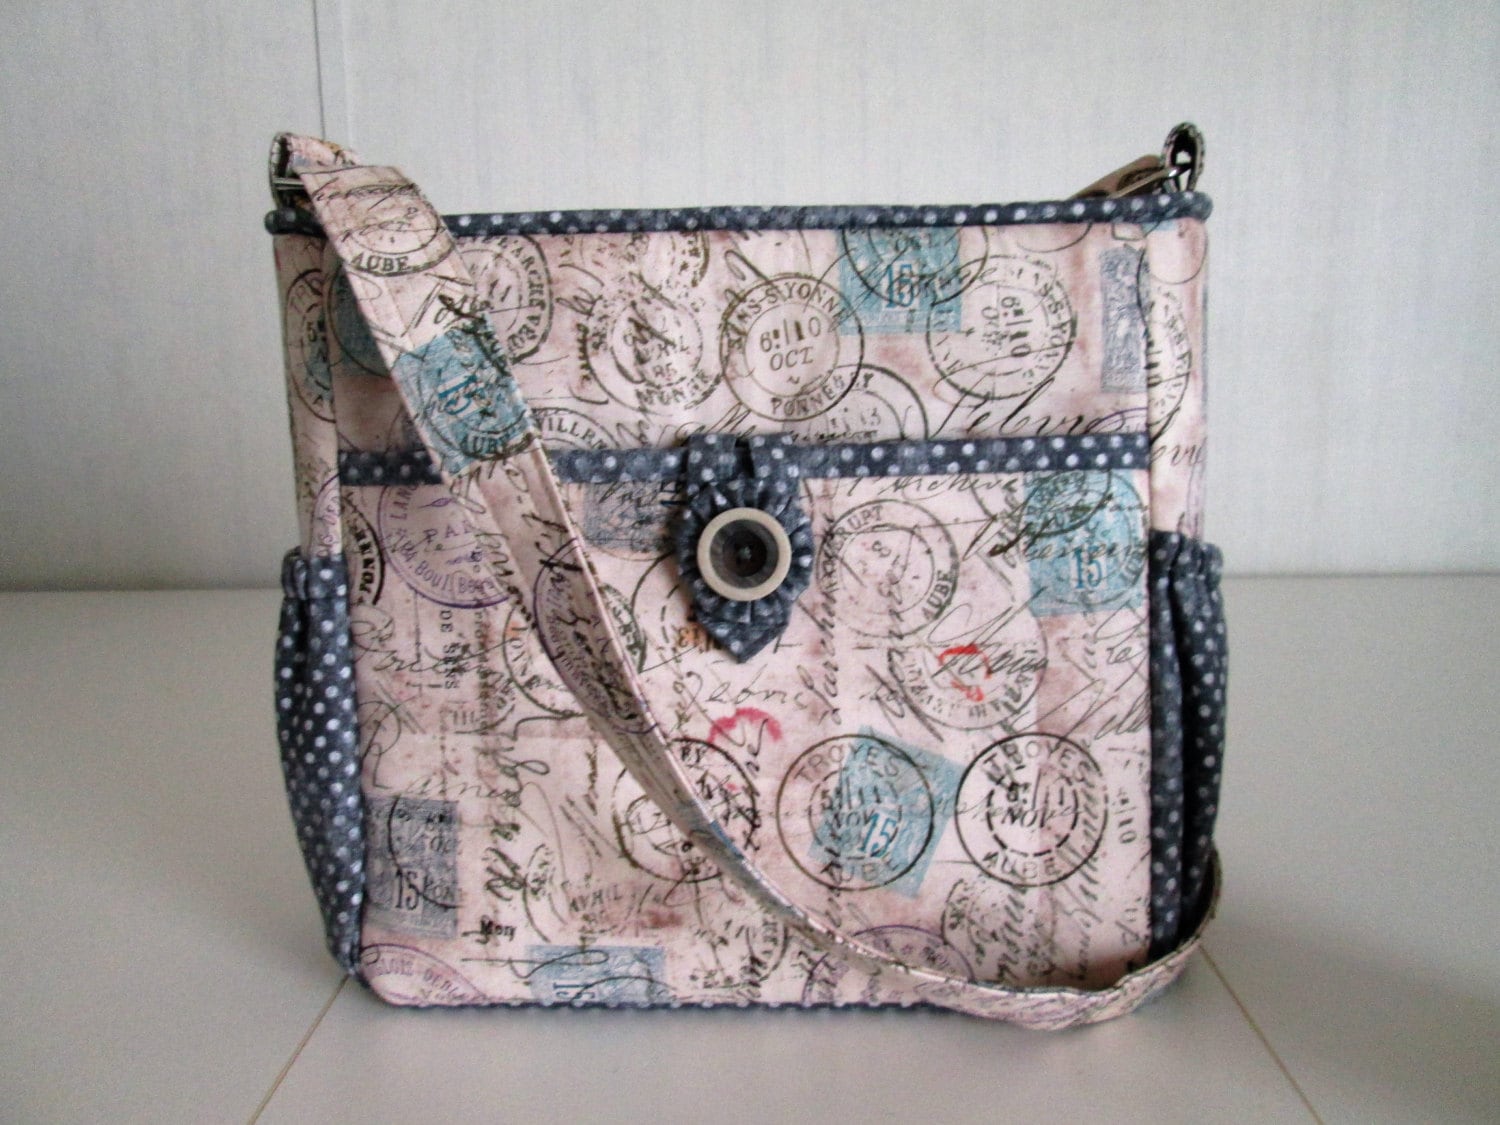 Johanna Crossbody Bag. PDF Sewing Pattern. Crossbody Bag.